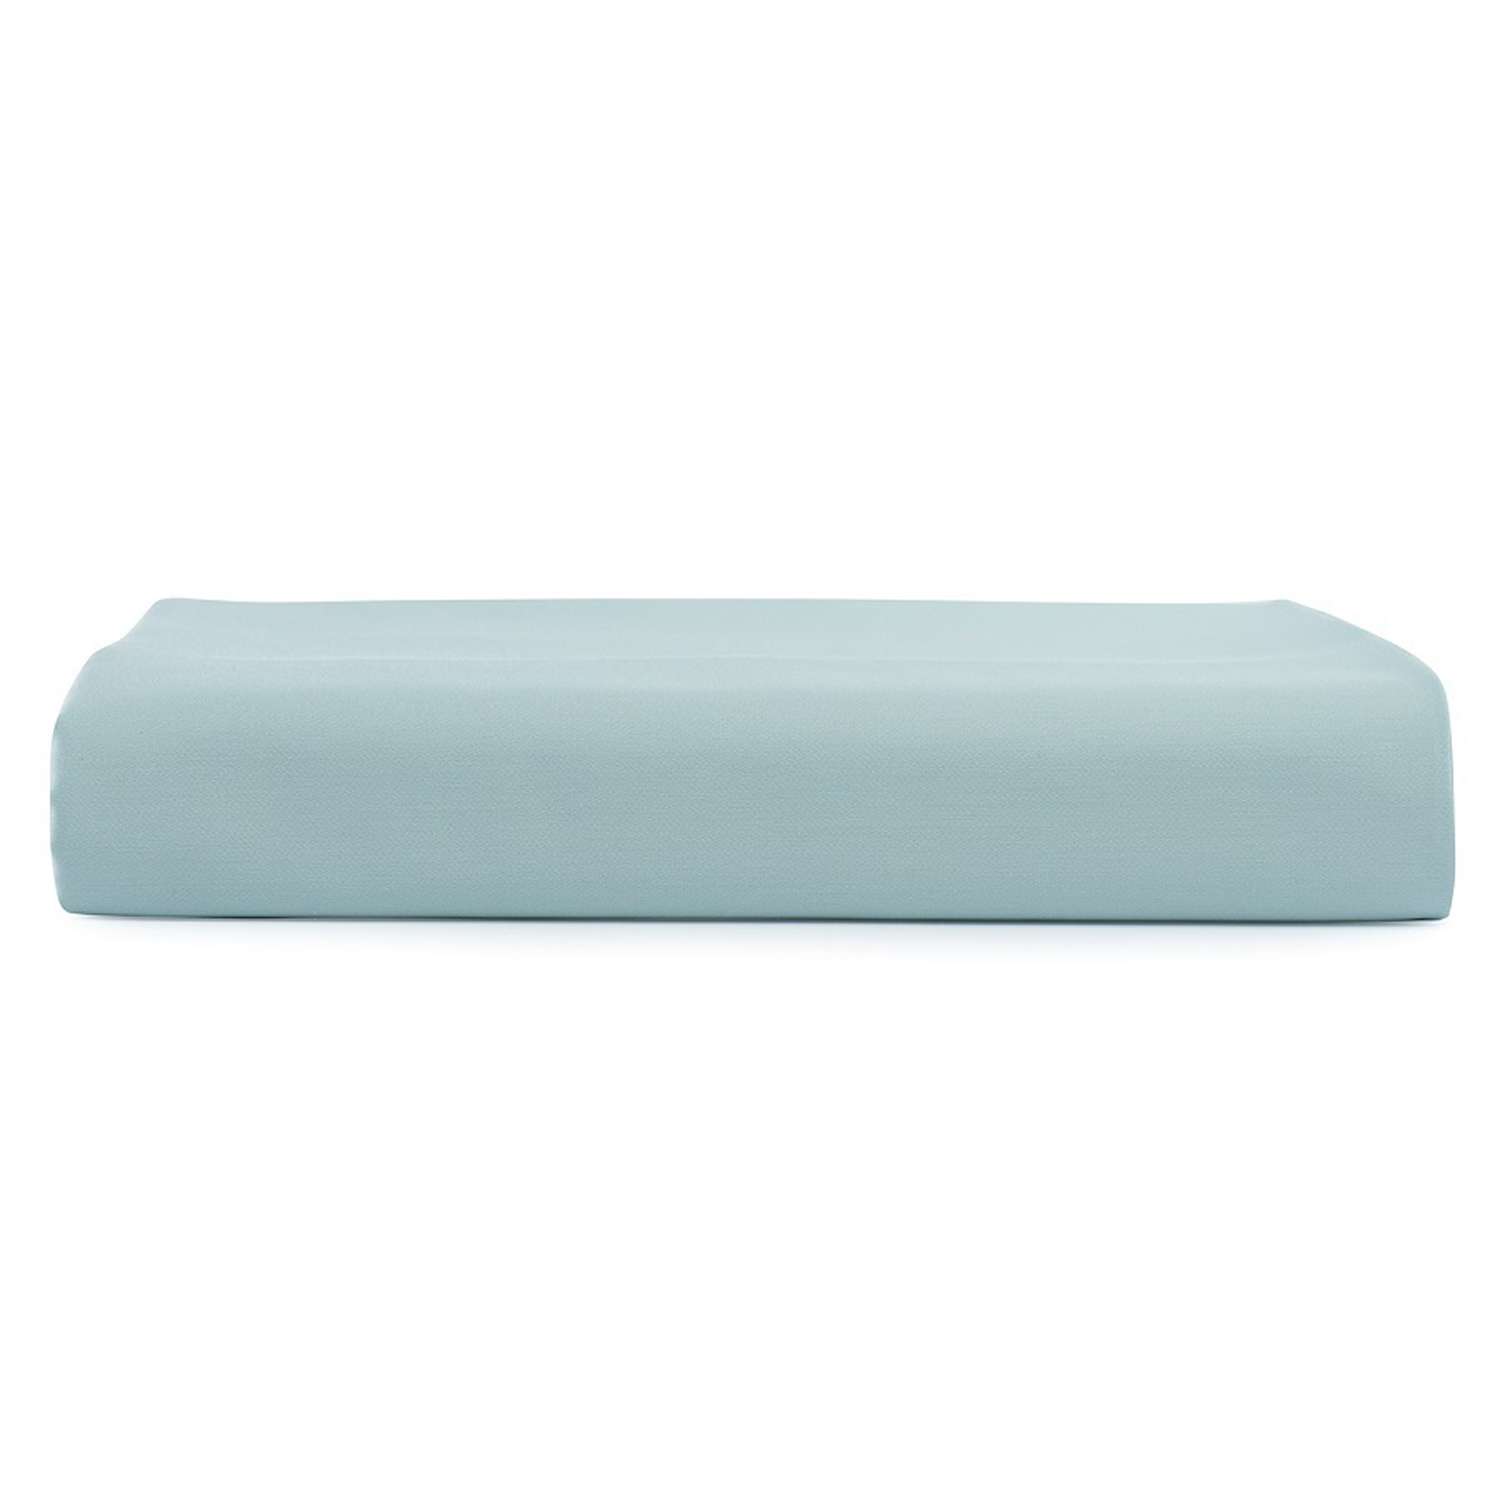 Простыня Tkano круглая на резинке из сатина голубого цвета Essential 75х75х20 см - фото 1